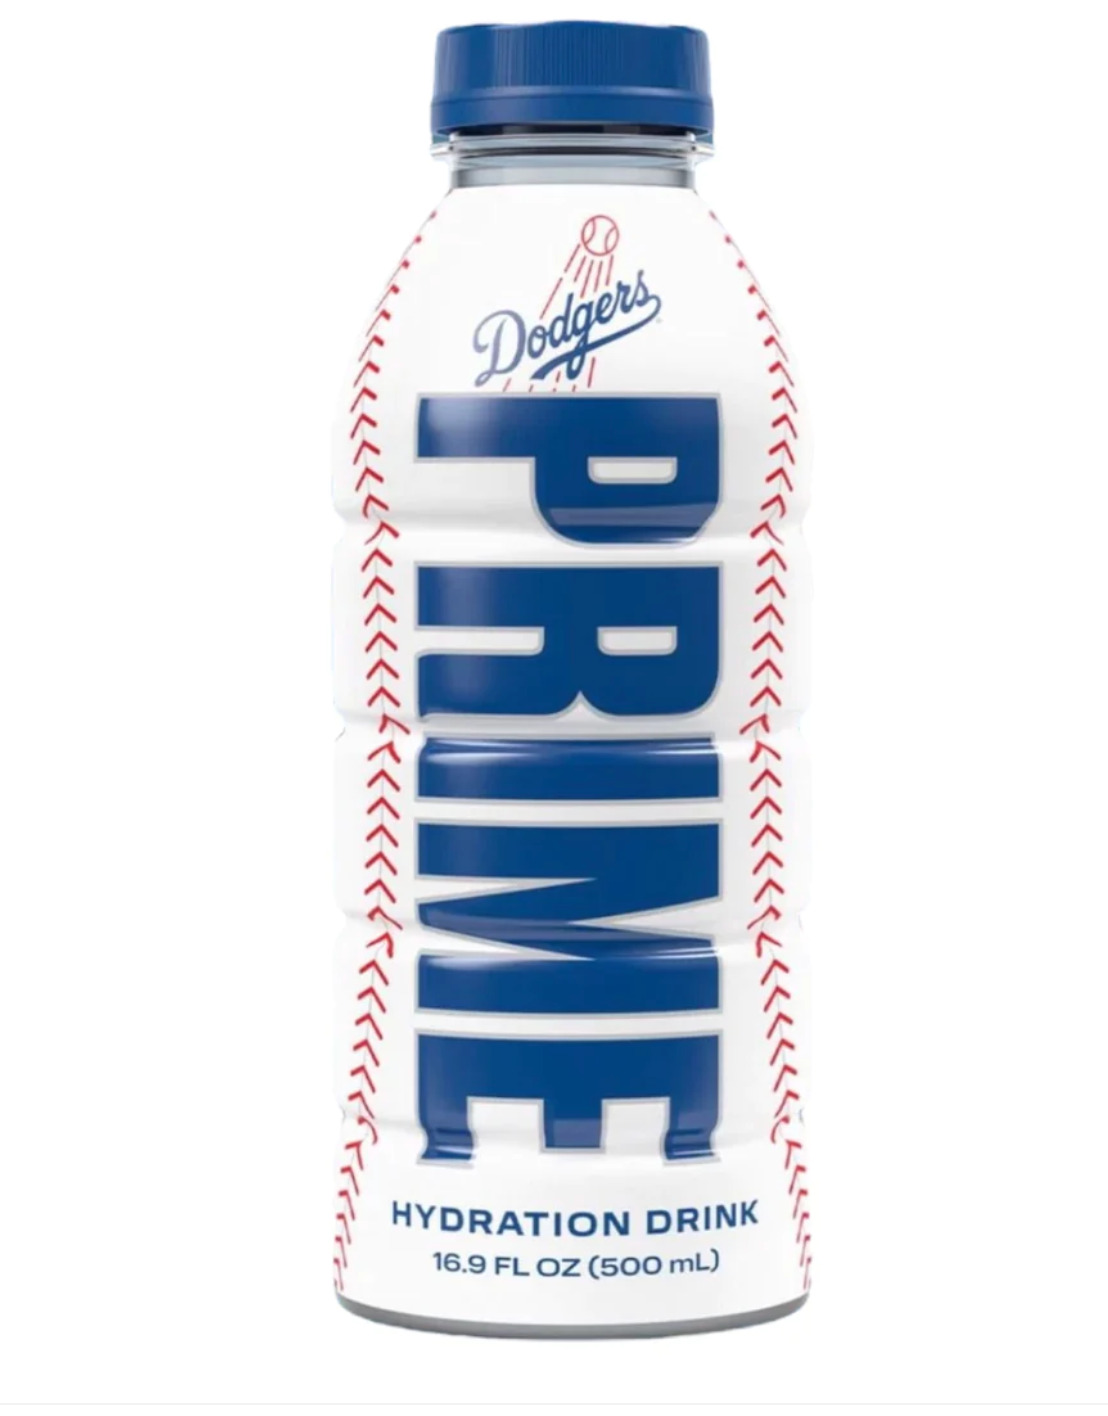 RARE Prime Hydration Drink LA DODGERS Limited Edition By Logan Paul x Ksi 16.9oz